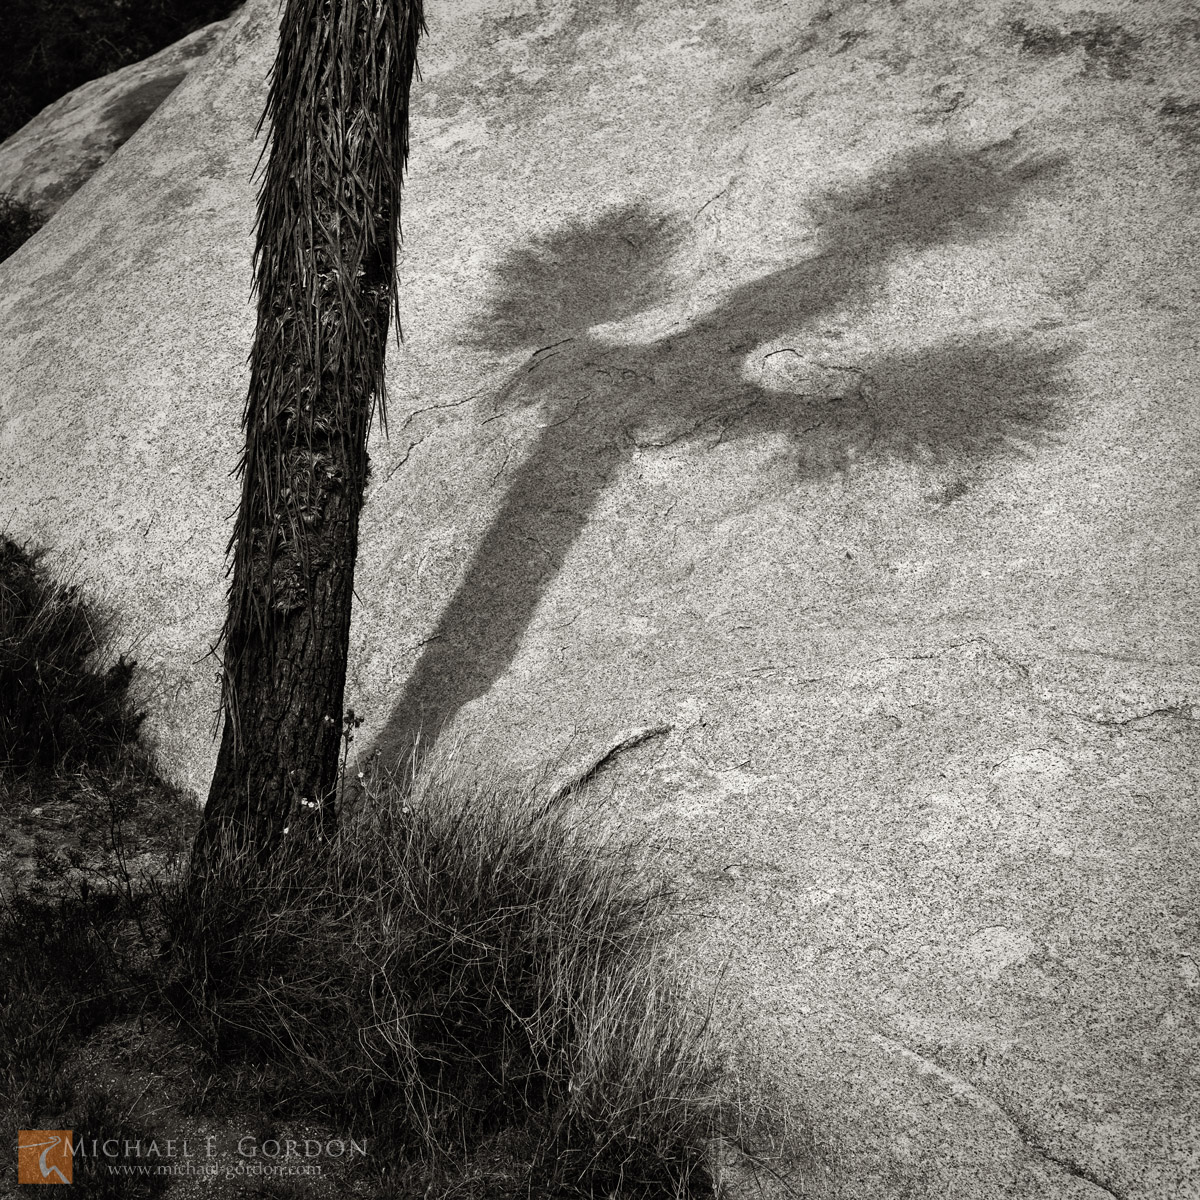 A Joshua tree (Yucca brevifolia) casts a distinct crucifix or cross-like shadow upon a quartz monzonite boulder.